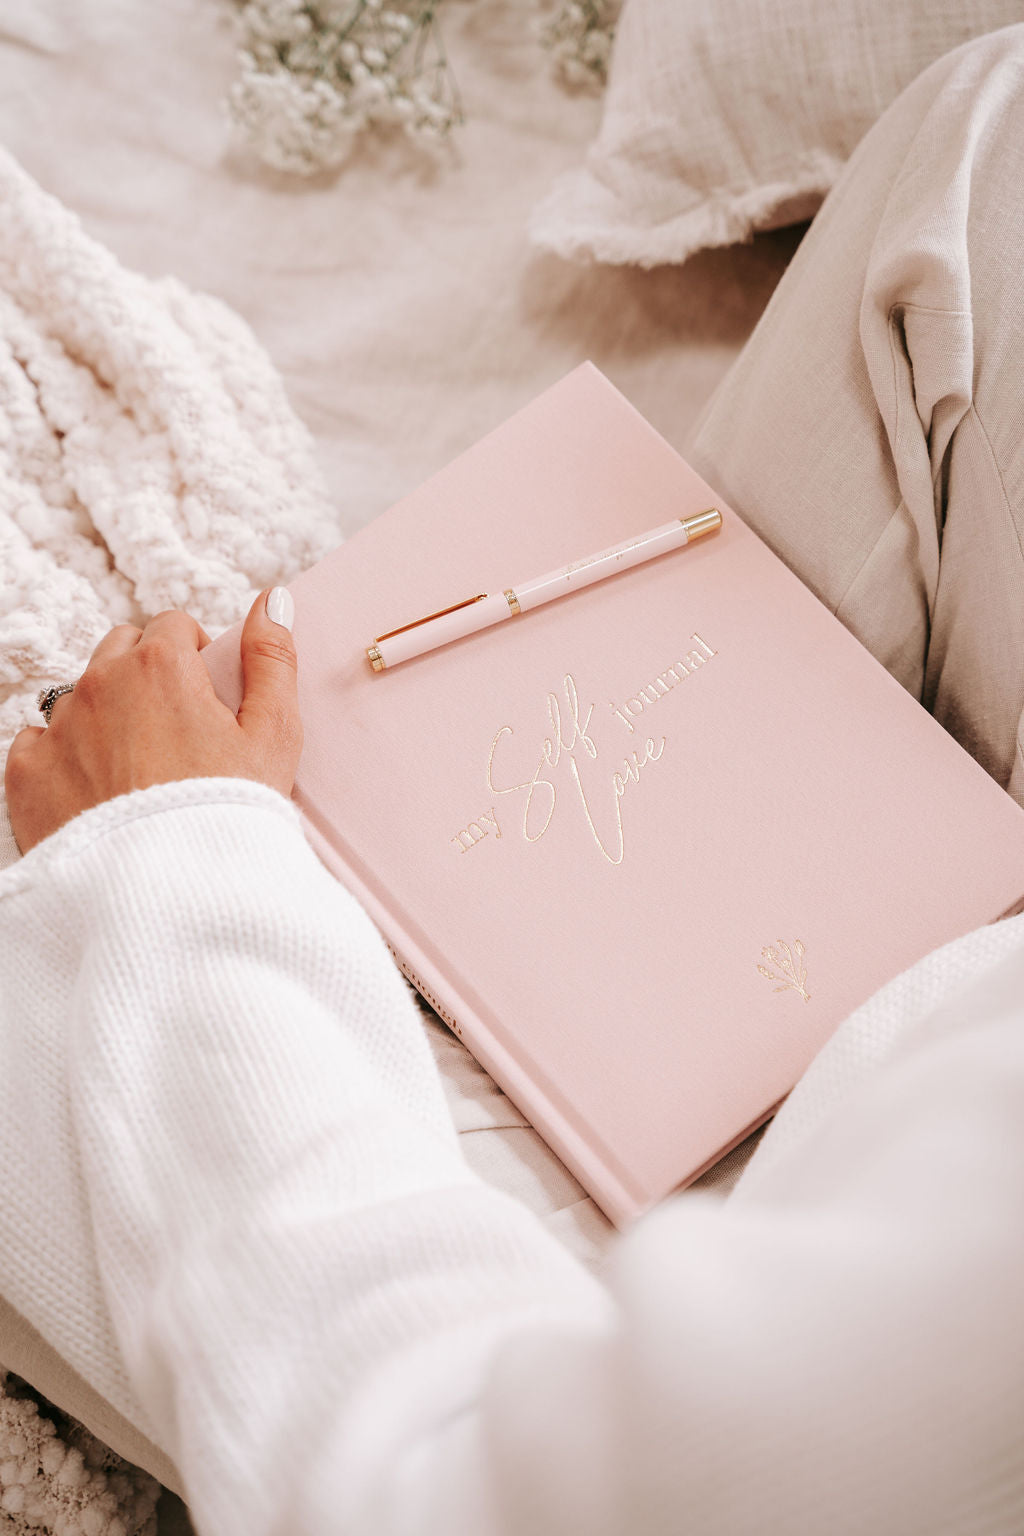 My Self-Love Journal